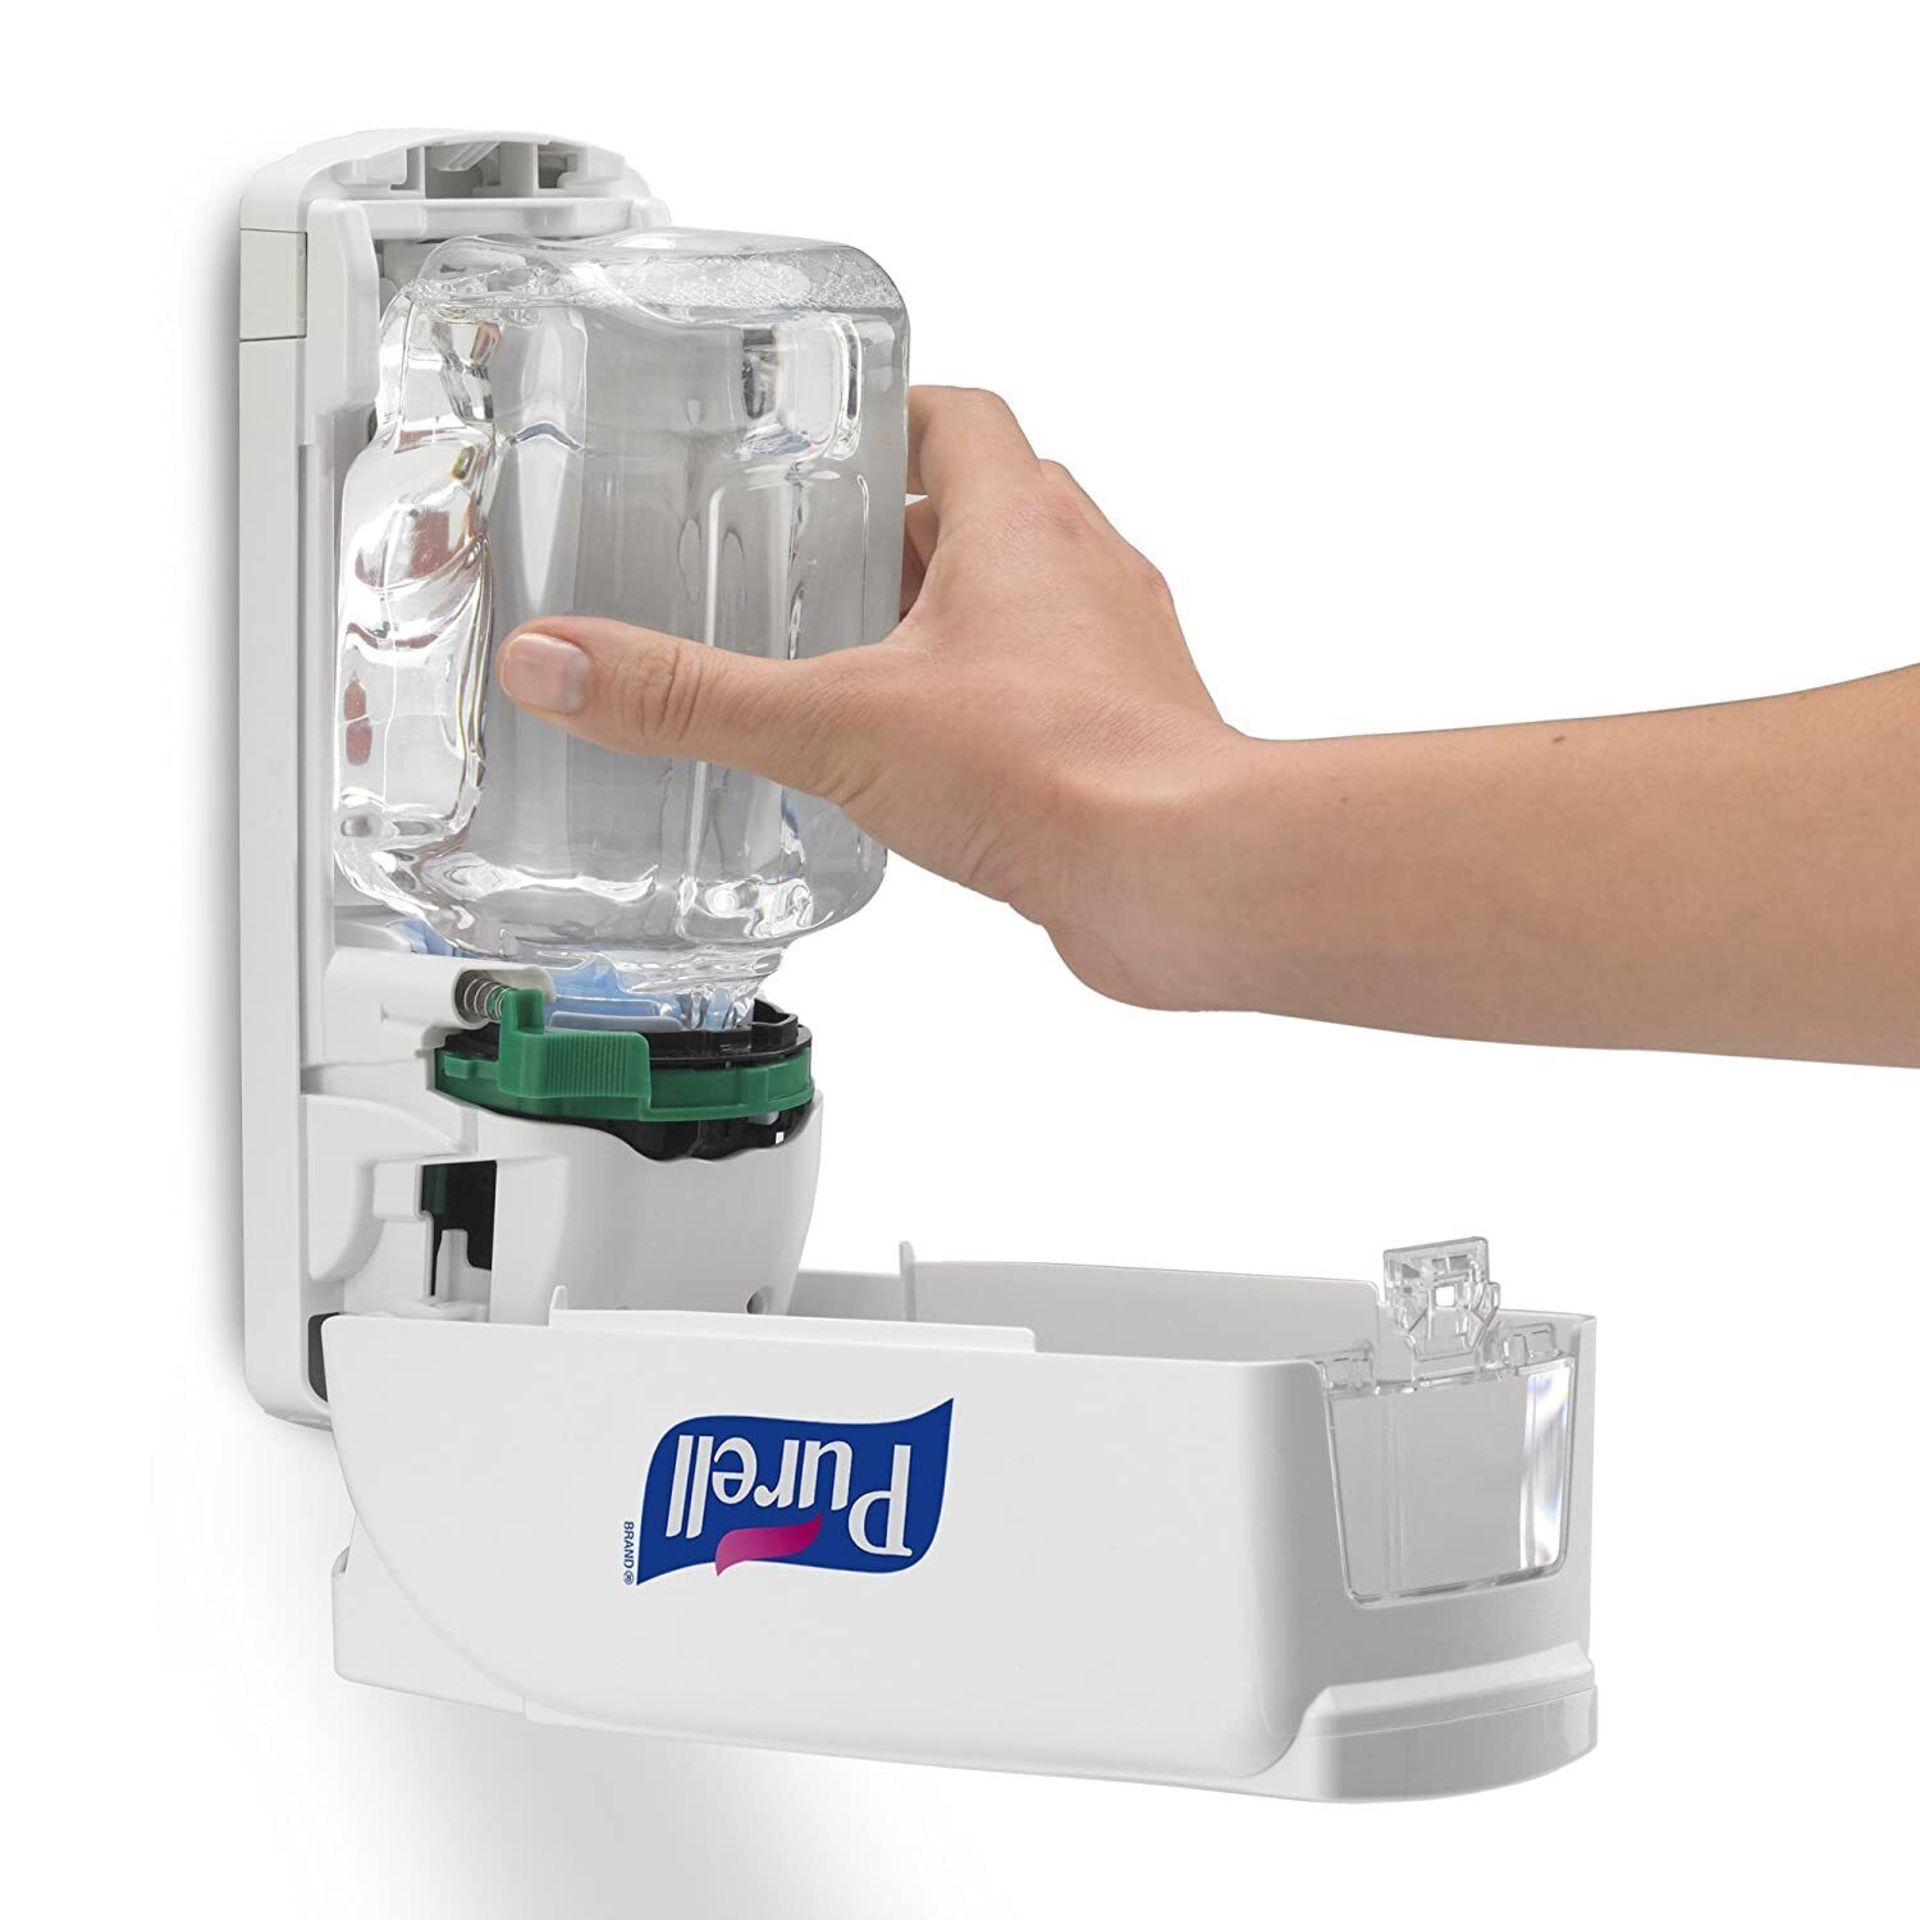 10x Soap Gel Hand Dispenser White Bathroom Commercial Manual ADX-7 Lot#600 - Image 3 of 4